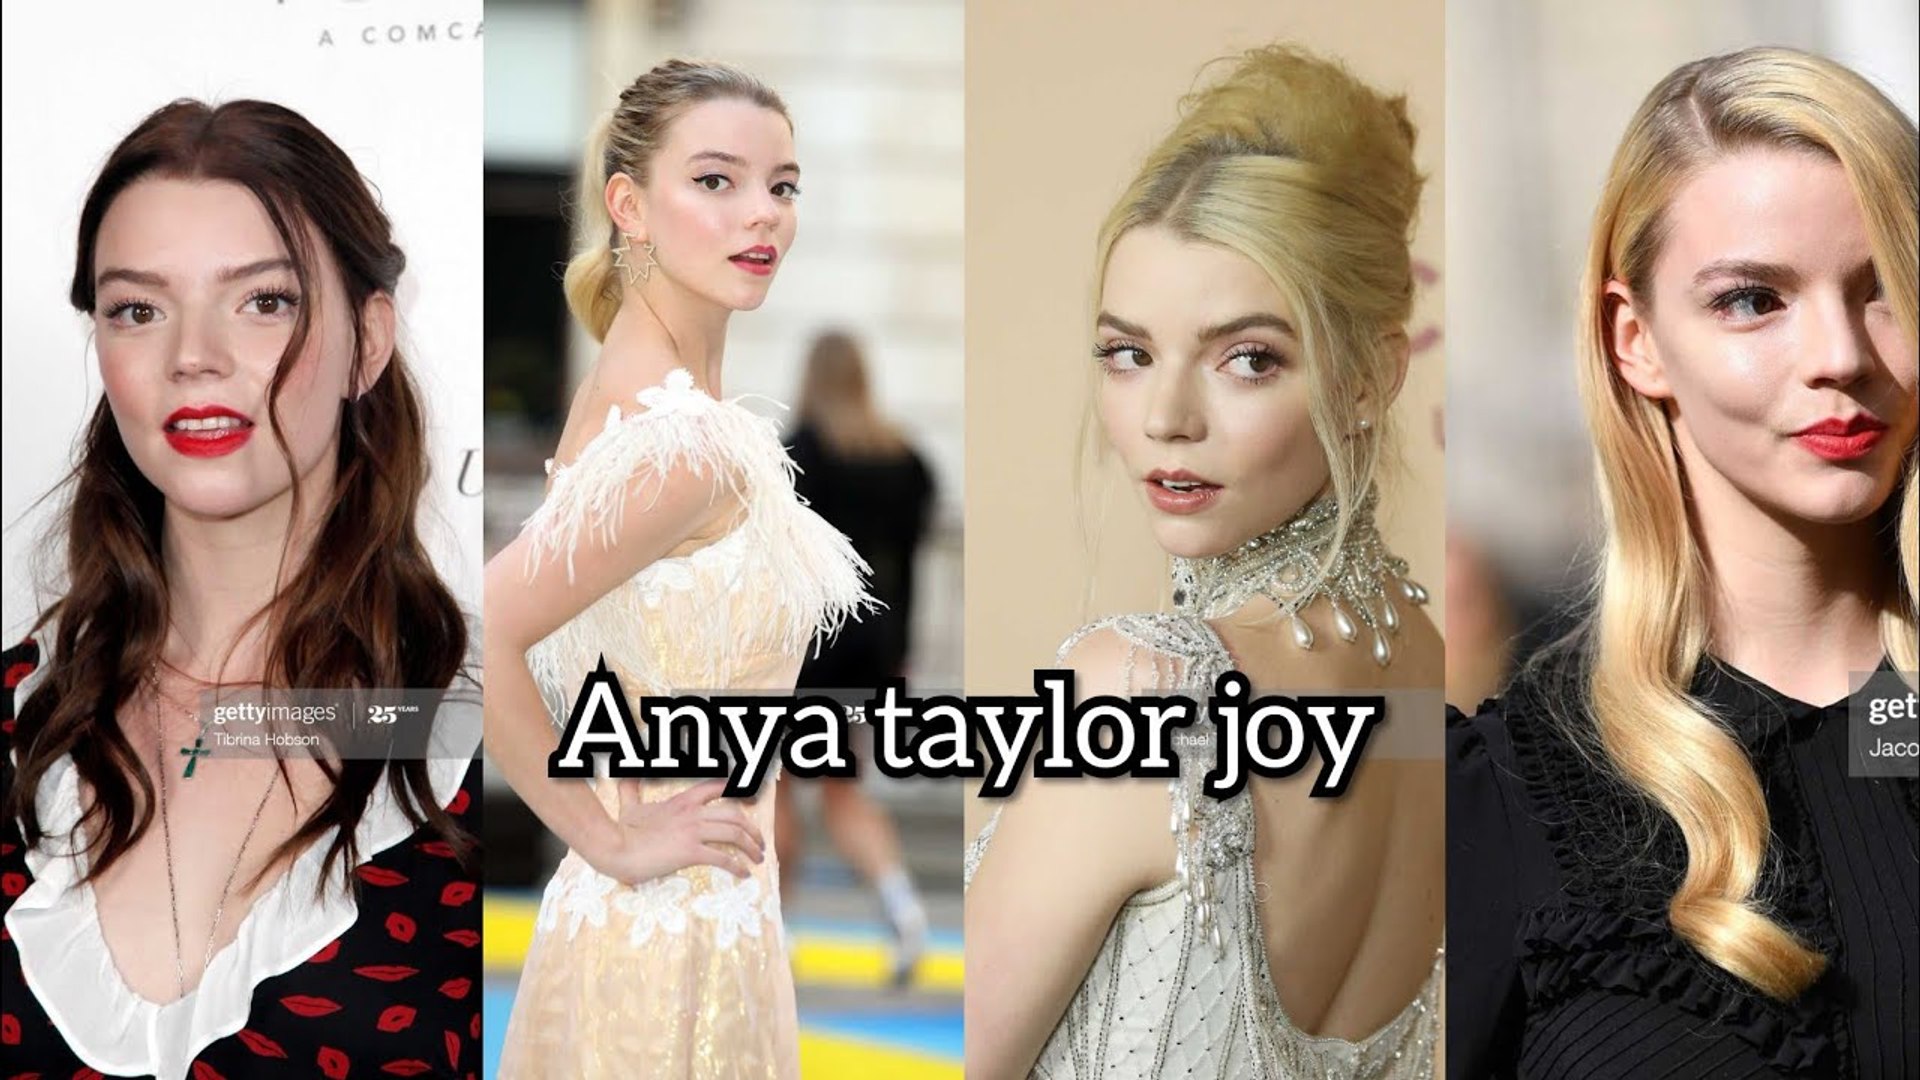 Anya taylor joy hot fap challenge - video Dailymotion